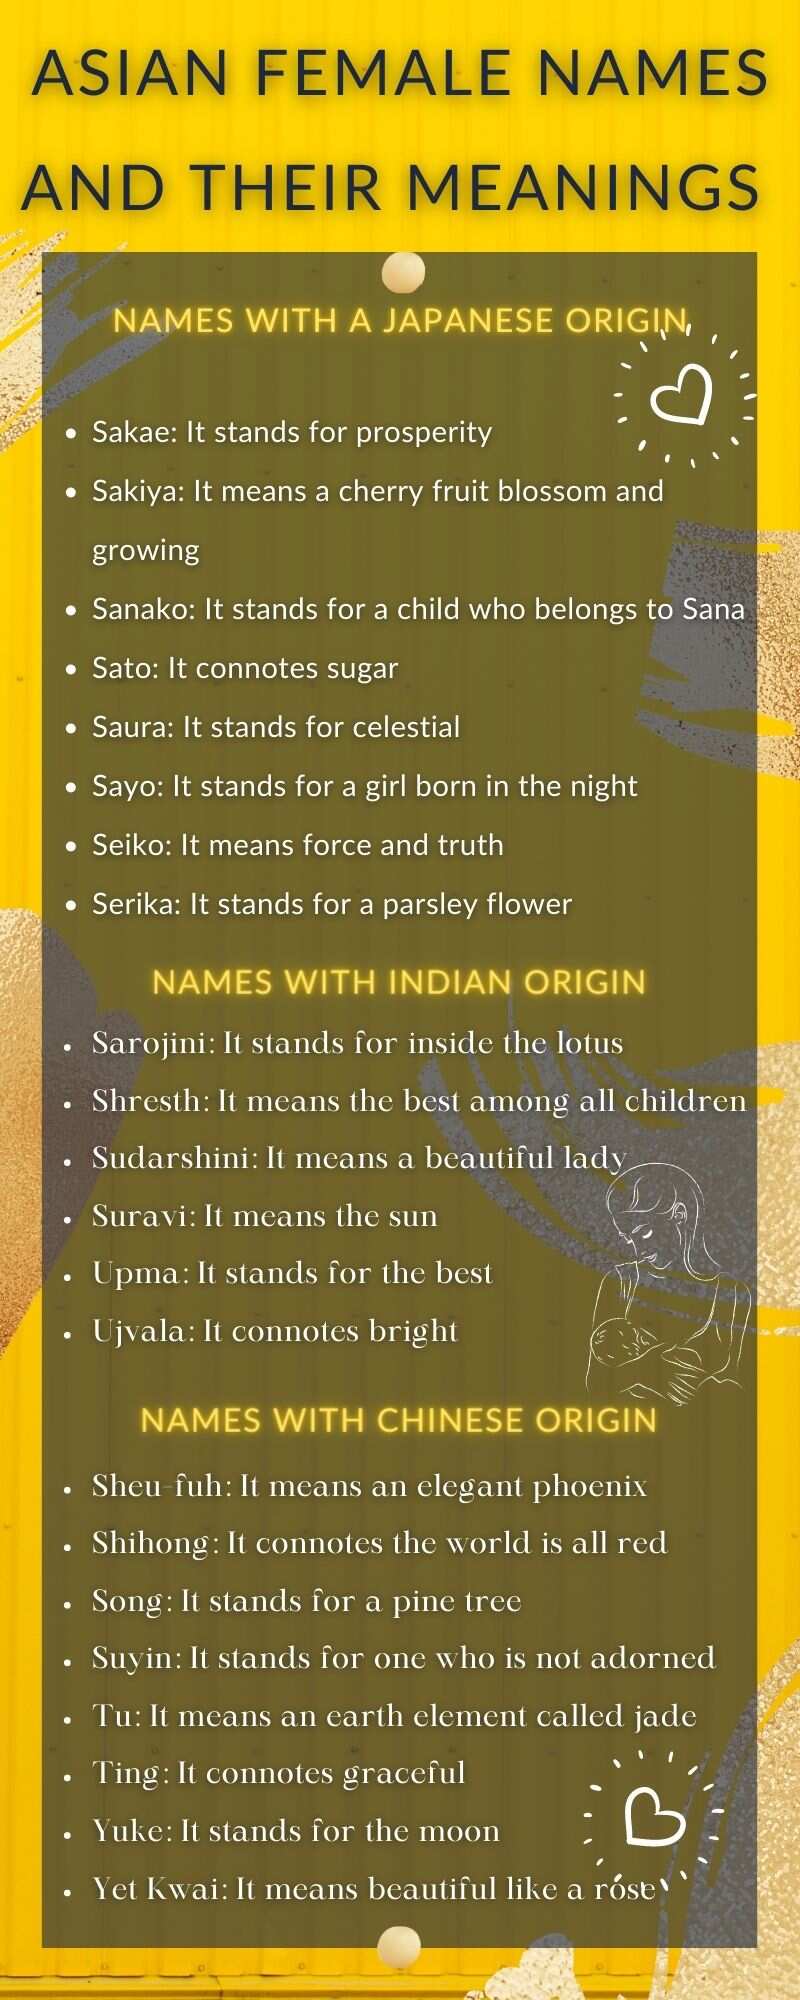 Asian female names